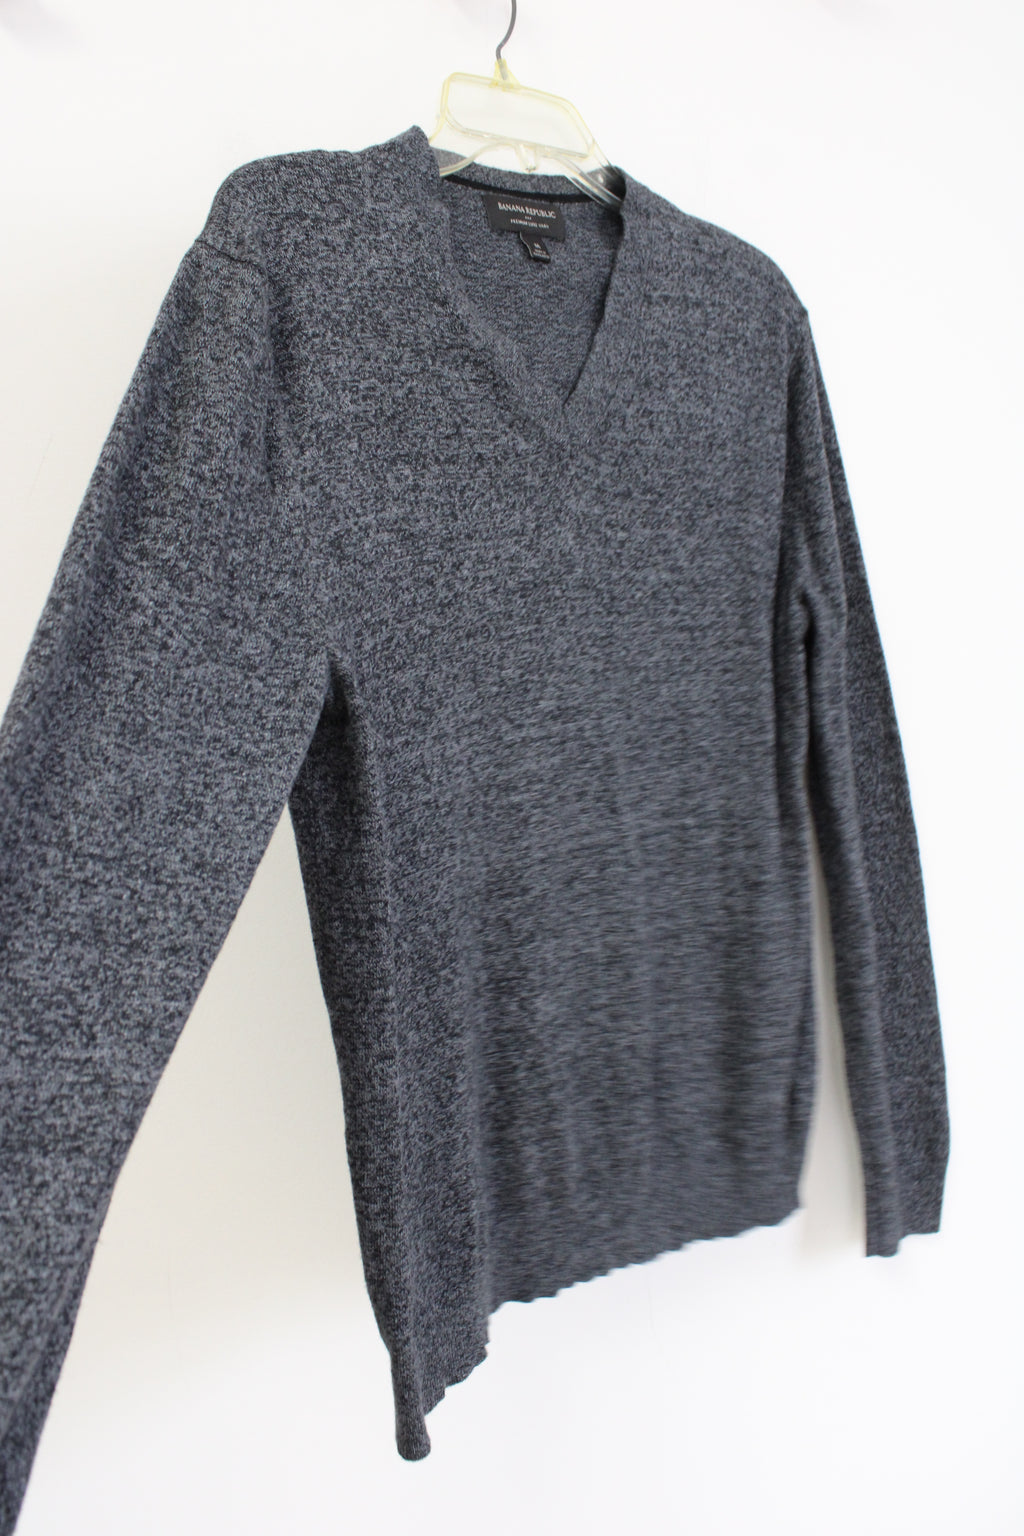 Banana Republic Premium Luxe Yarn Gray Knit Sweater | M